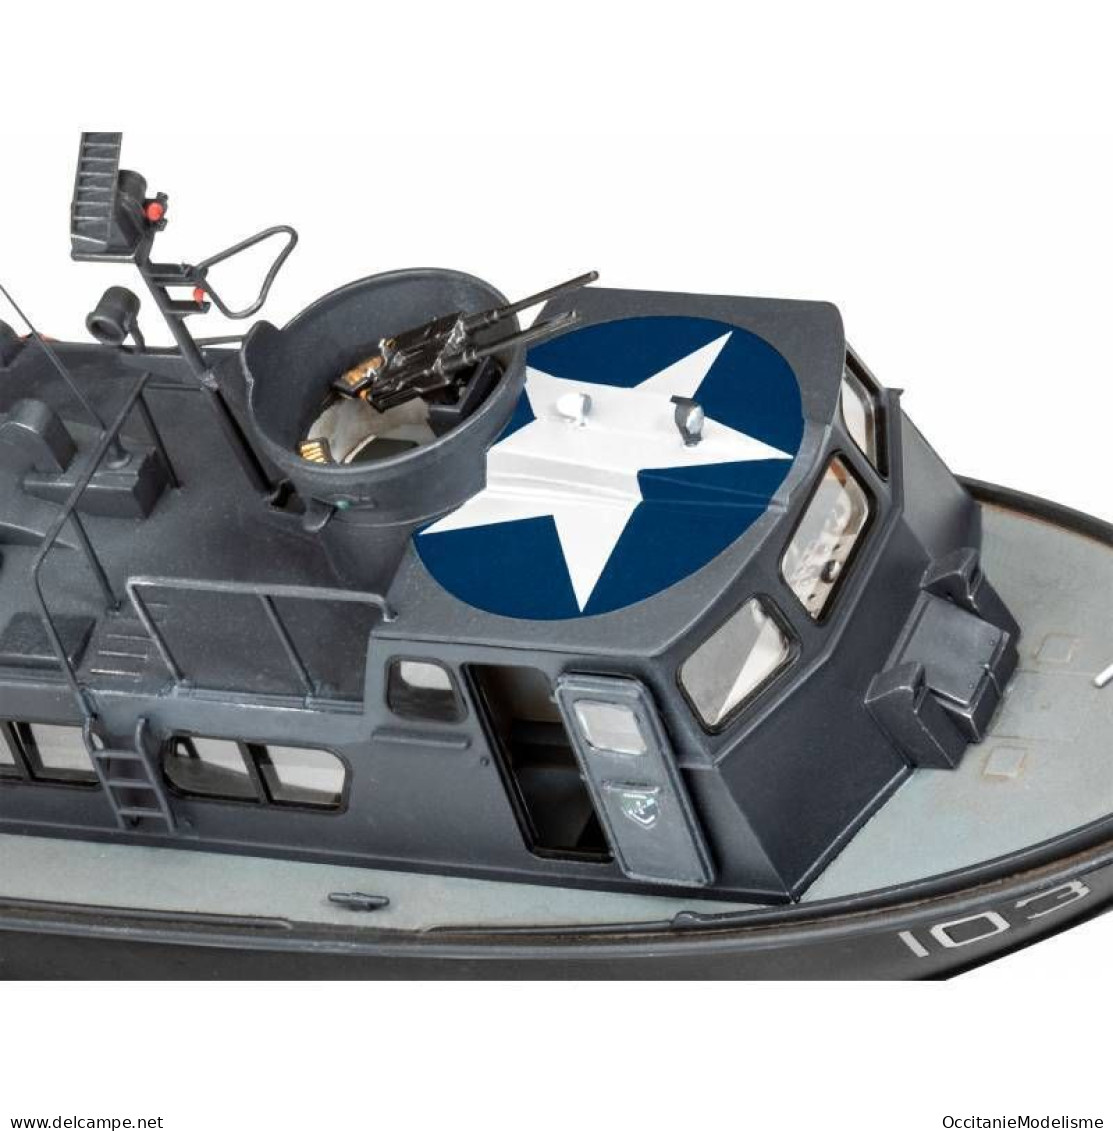 Revell - Patrouilleur SWIFT BOAT MK.I US Navy Maquette Militaire Kit Plastique Réf. 05176 Neuf 1/72 - Boats